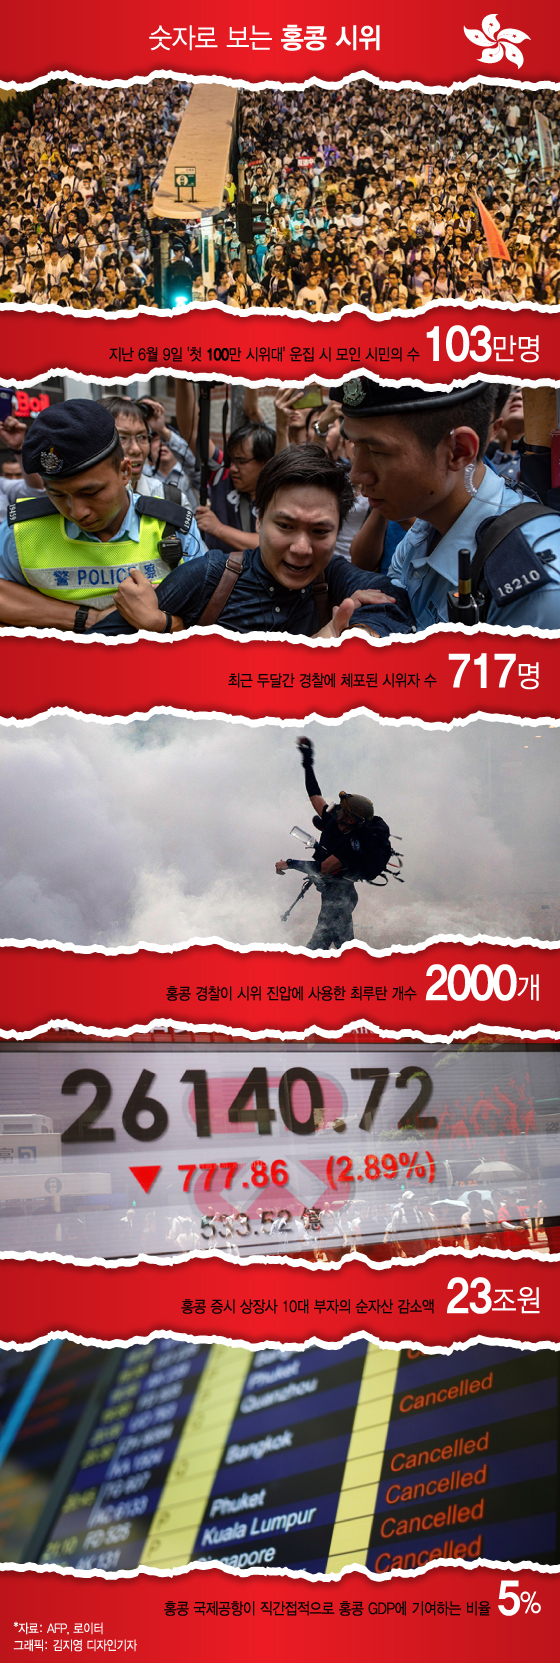 [MT리포트]숫자로 보는 두 달간의 '홍콩 시위'